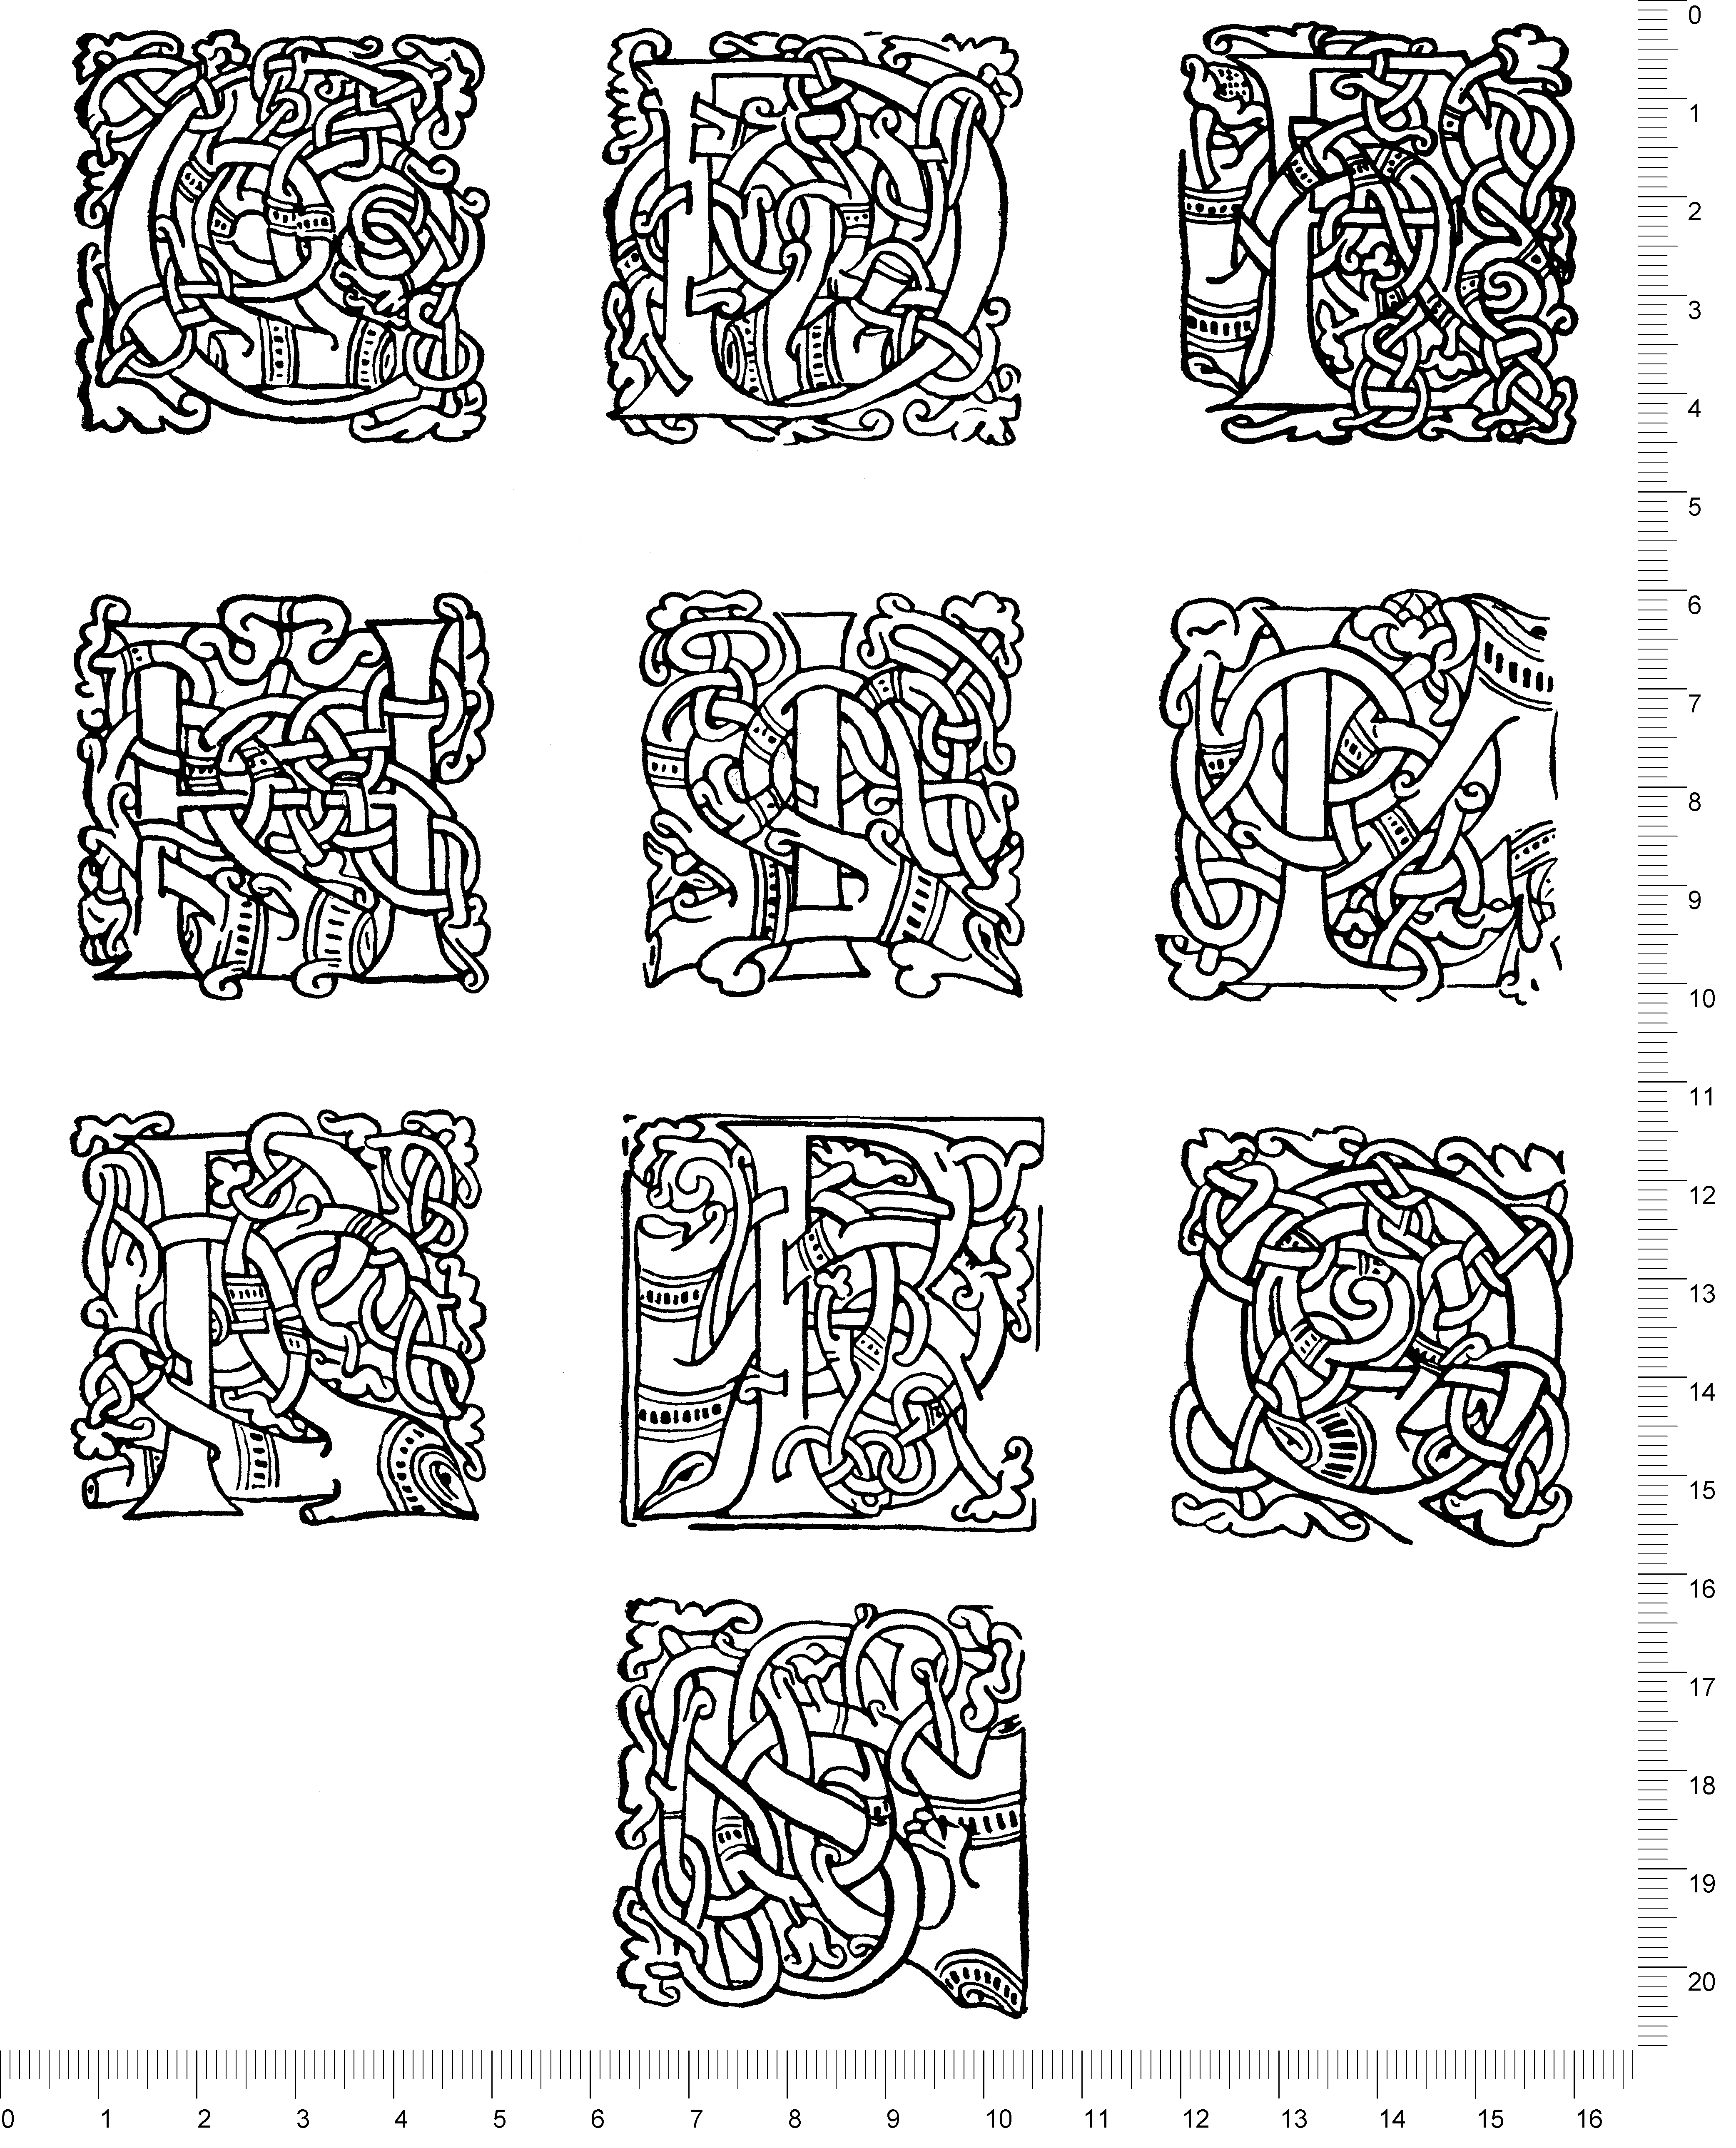 Abbildung der GfT-Tafeln vonGfT1960.1